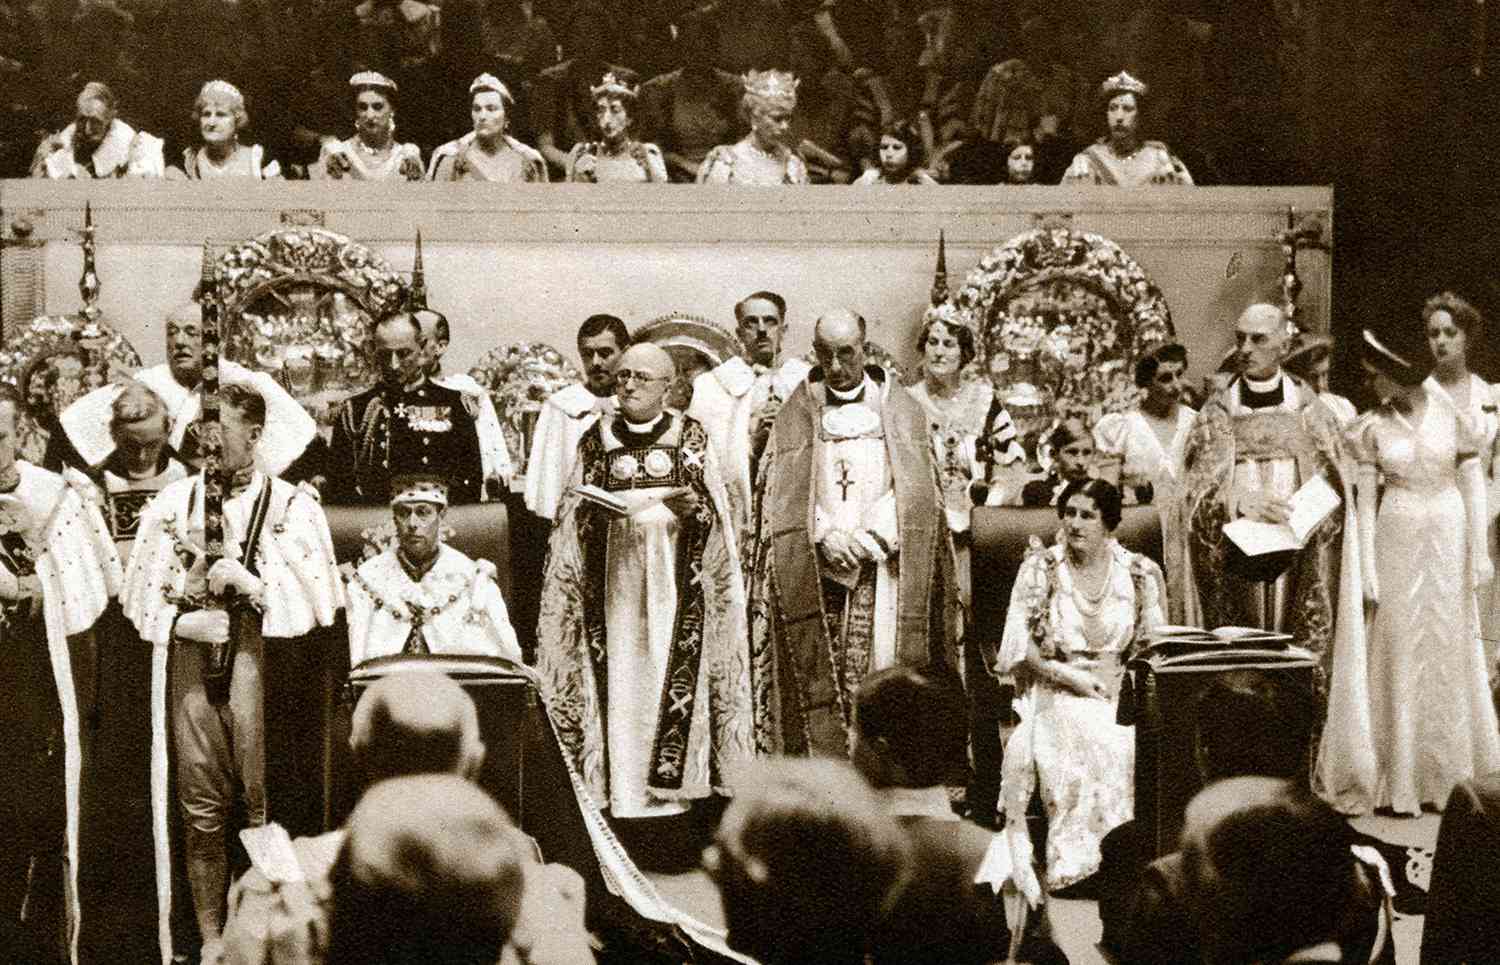 Coronation of King George Vi - 12 May 1937